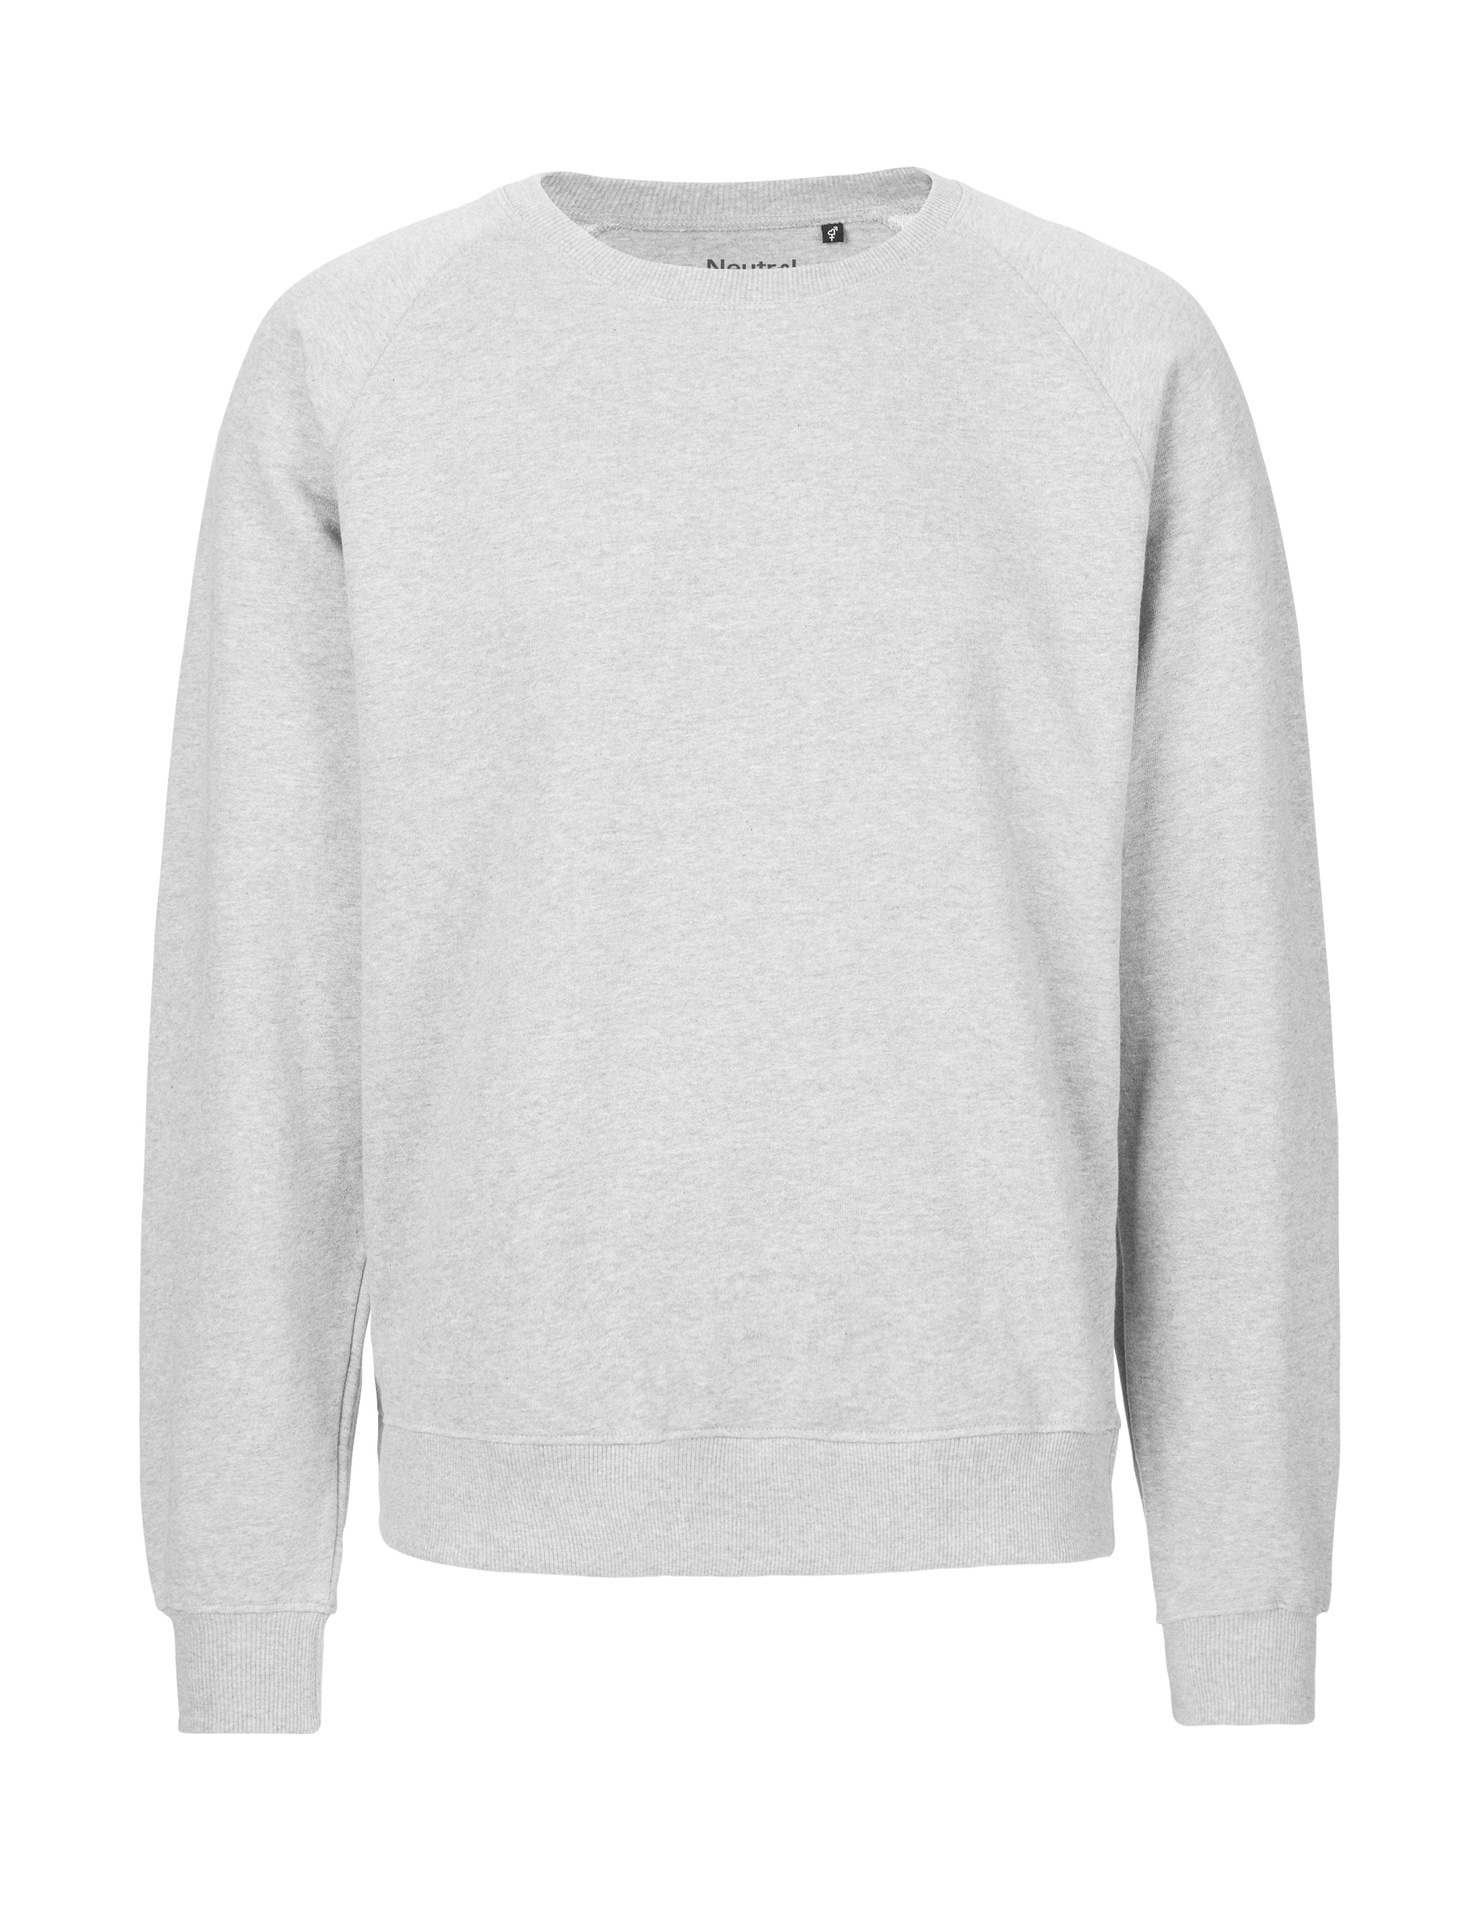 [PR/02753] Unisex Sweatshirt (Ash Grey 22, M)